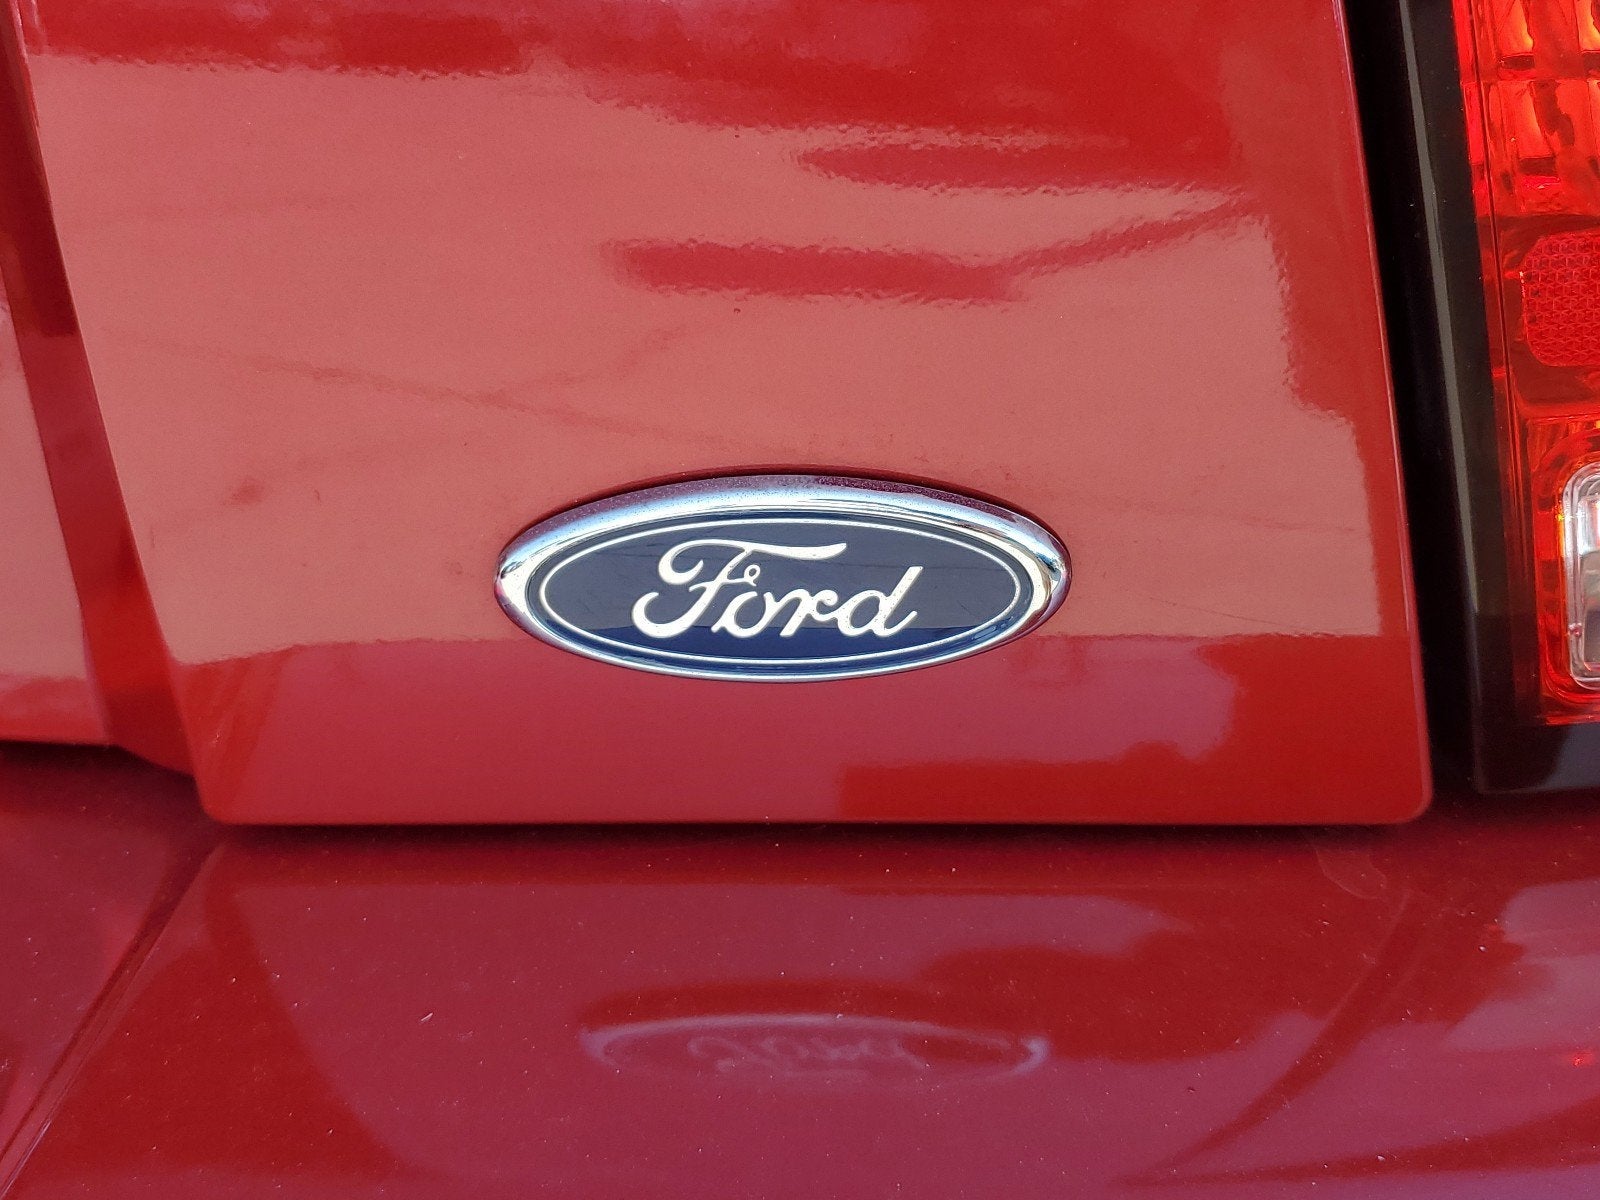 2000 Ford Mustang V6